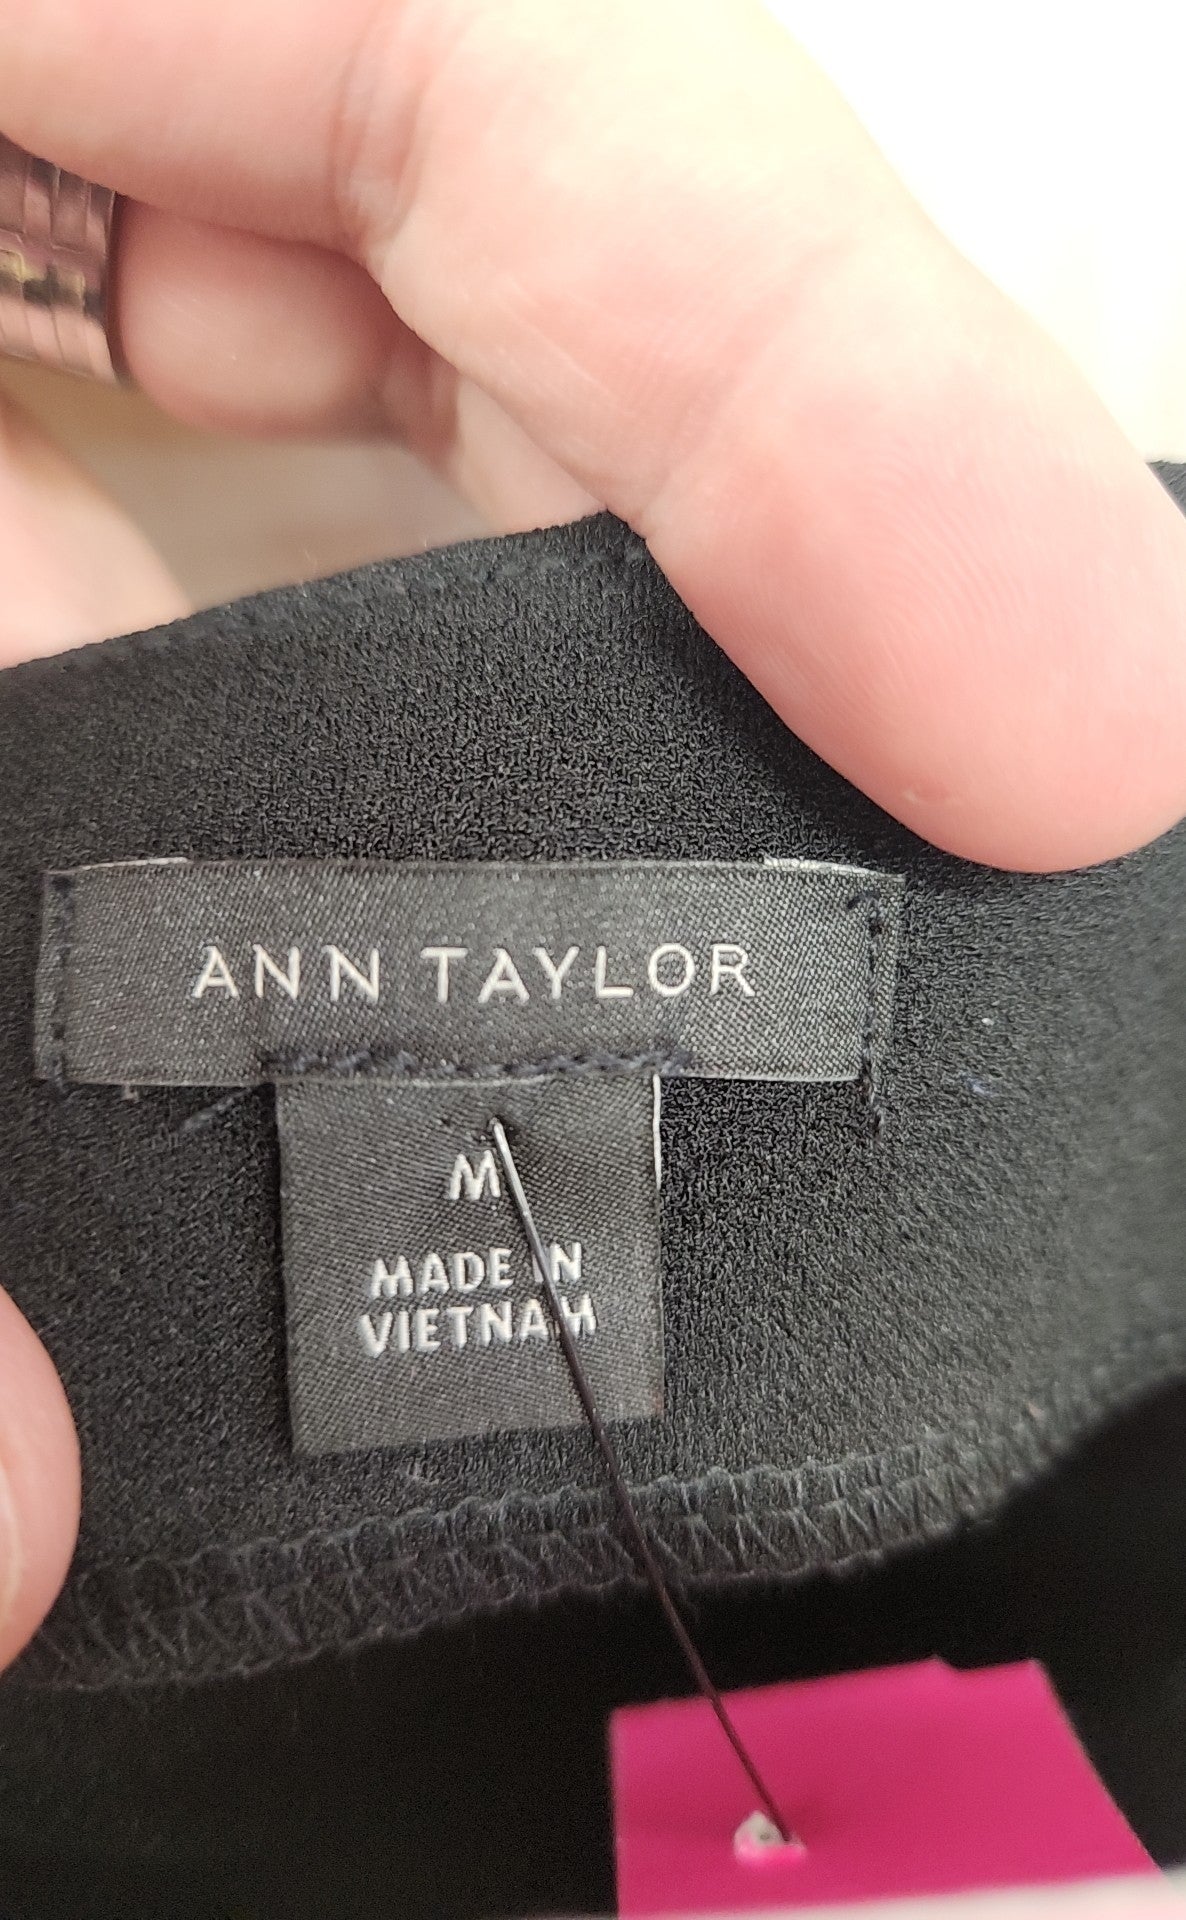 Ann Taylor Women's Size M Black Sleeveless Top